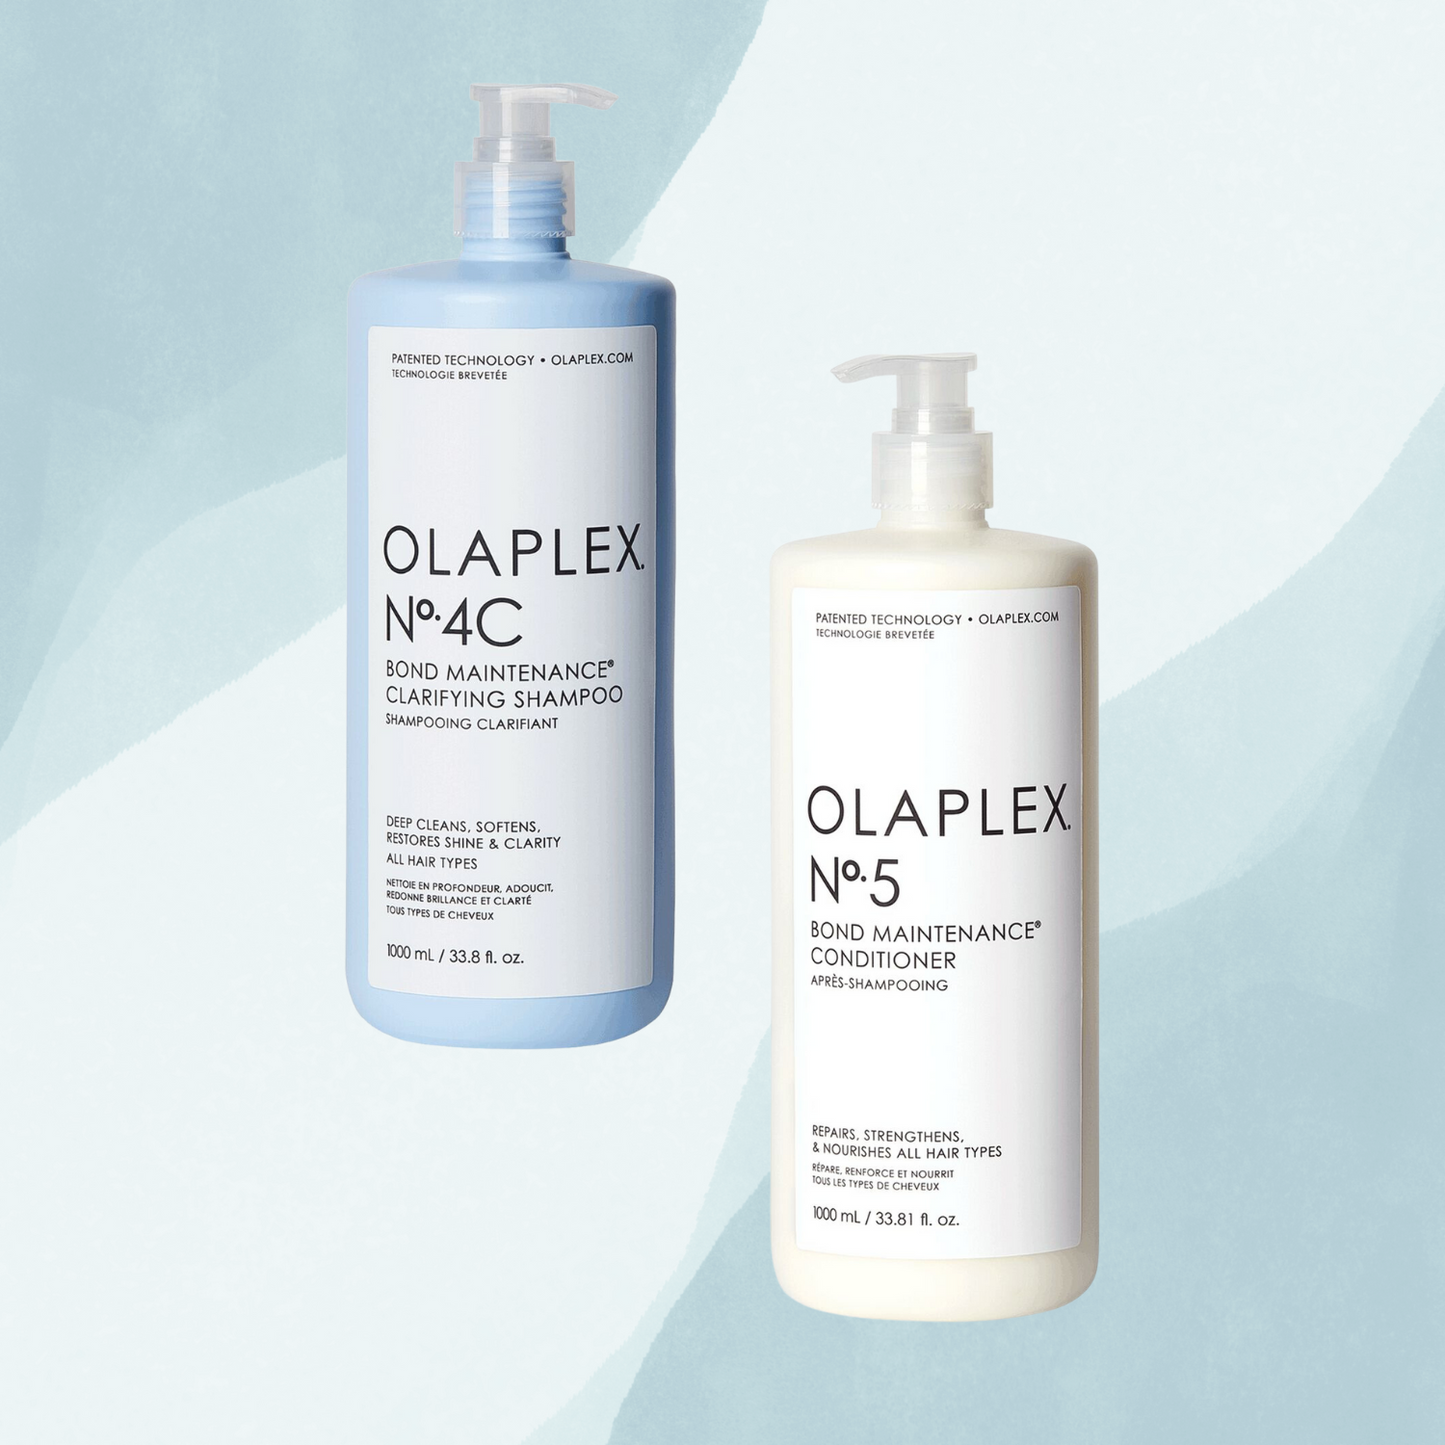 Olaplex - No. 4C Bond Maintenance Clarifying Shampoo Liter & No. 5 Bond Maintenance Conditioner Liter